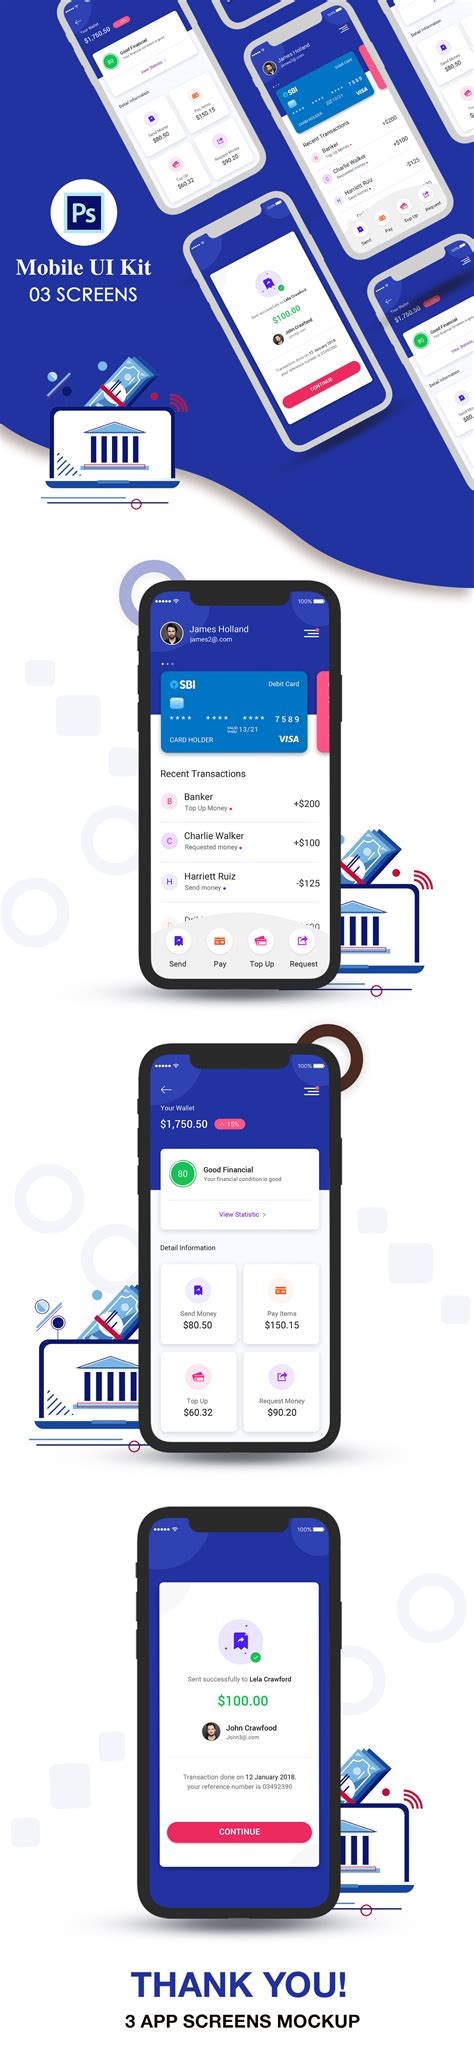 digital bank app ui kit